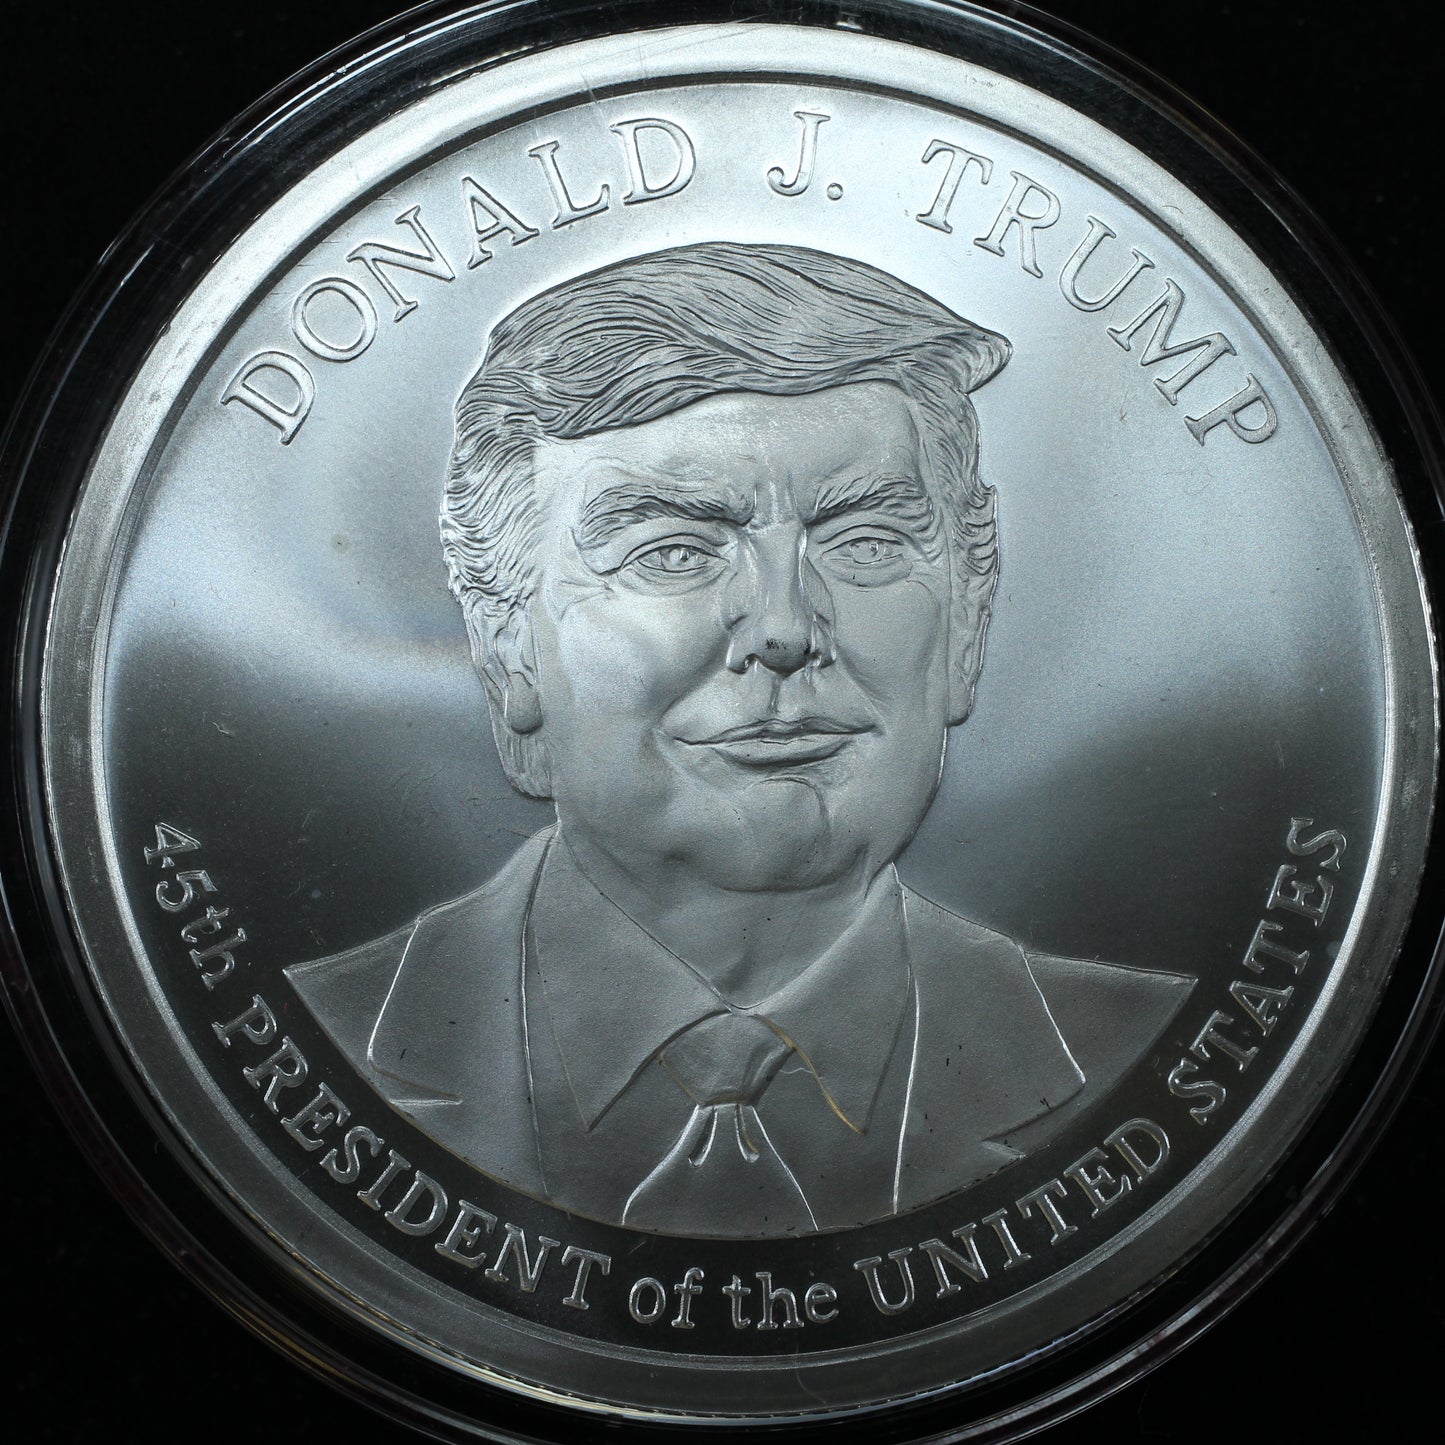 5 oz .999 Fine Silver Round - President Donald J. Trump - Golden State Mint w/ Capsule